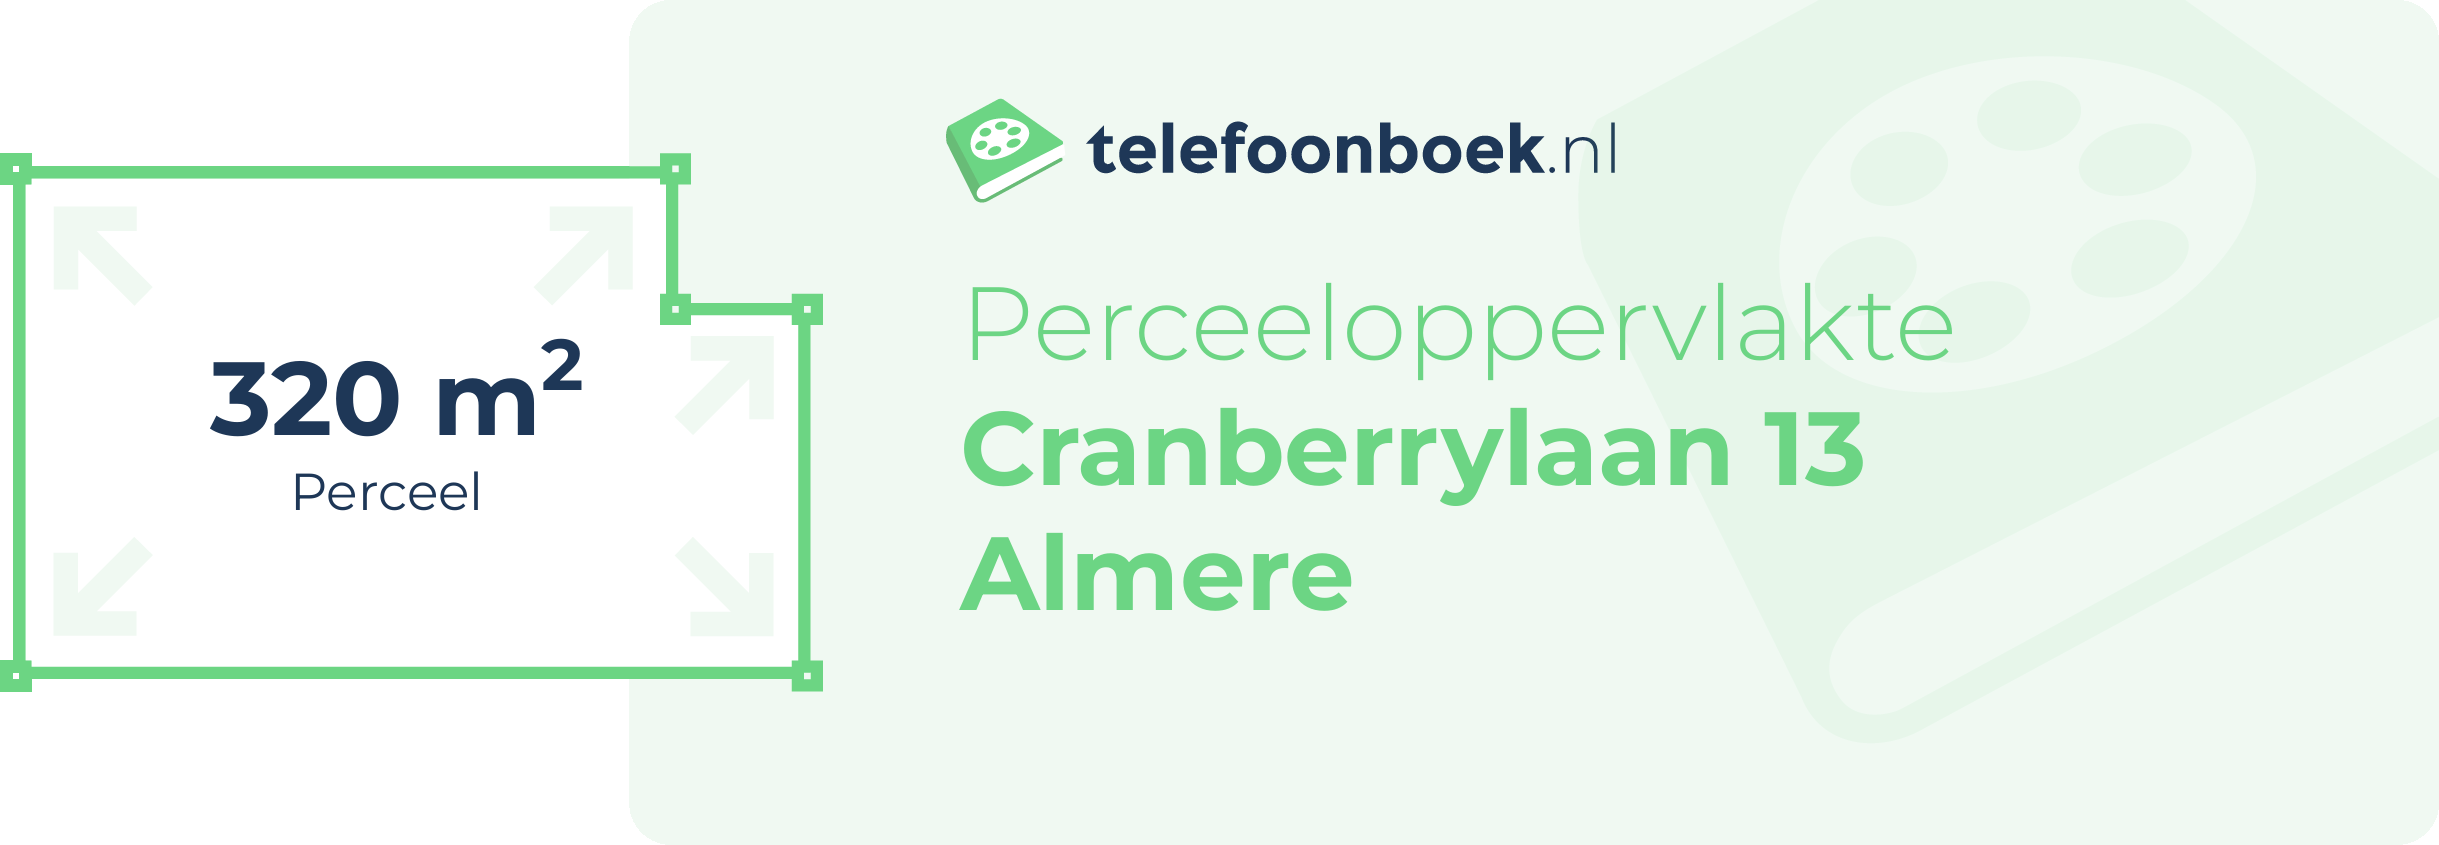 Perceeloppervlakte Cranberrylaan 13 Almere